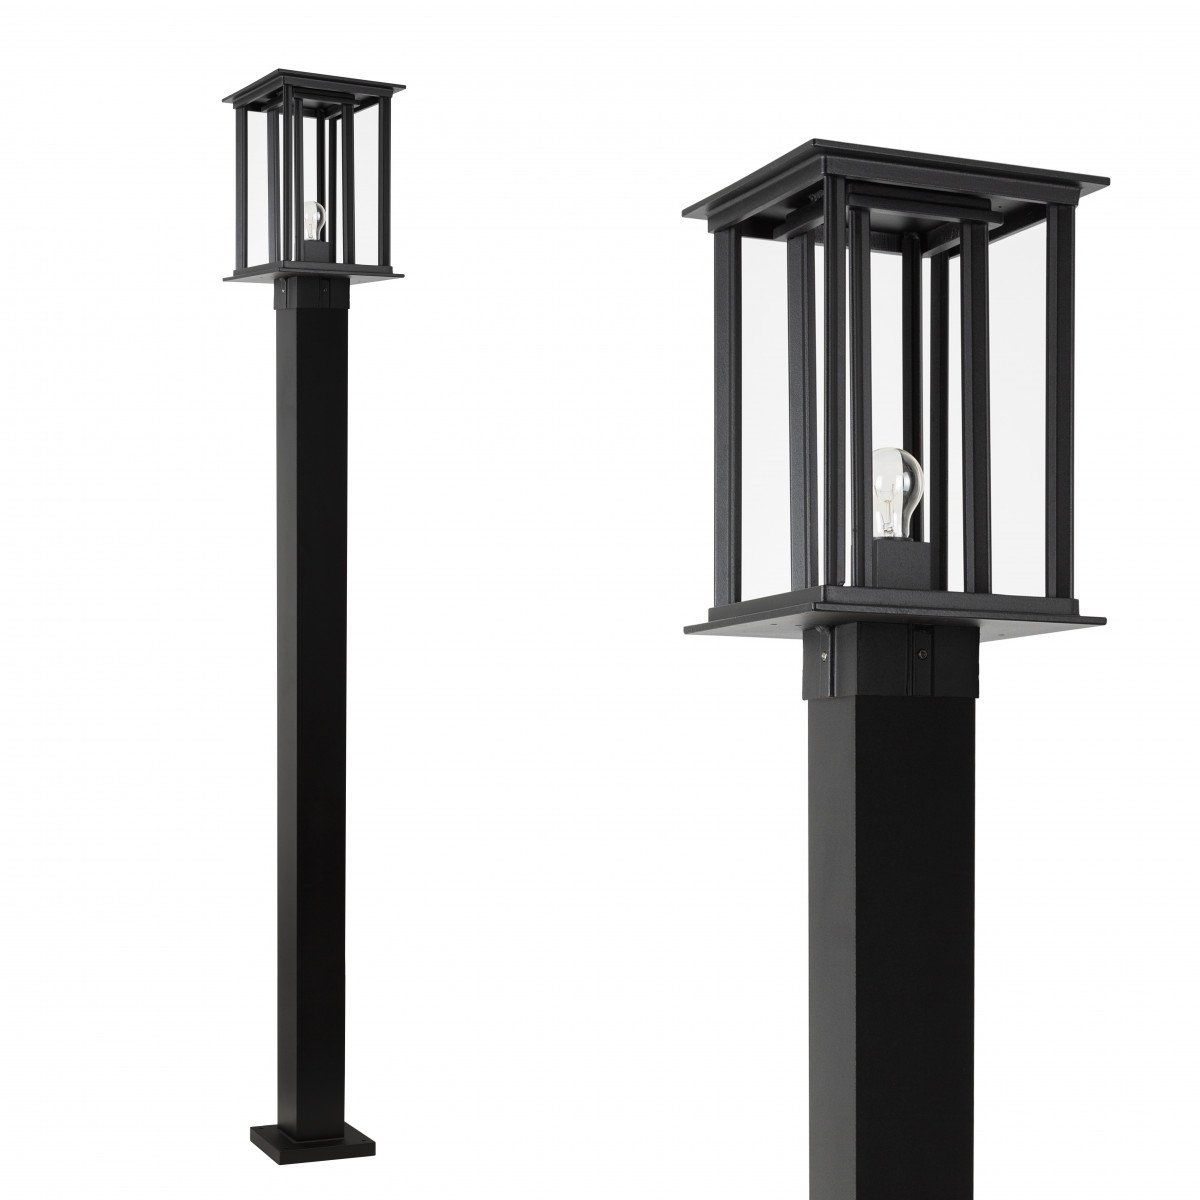 Strakke en moderne buitenlamp Capital New York Lantaarn tuinlamp vierkant in de kleur zwart